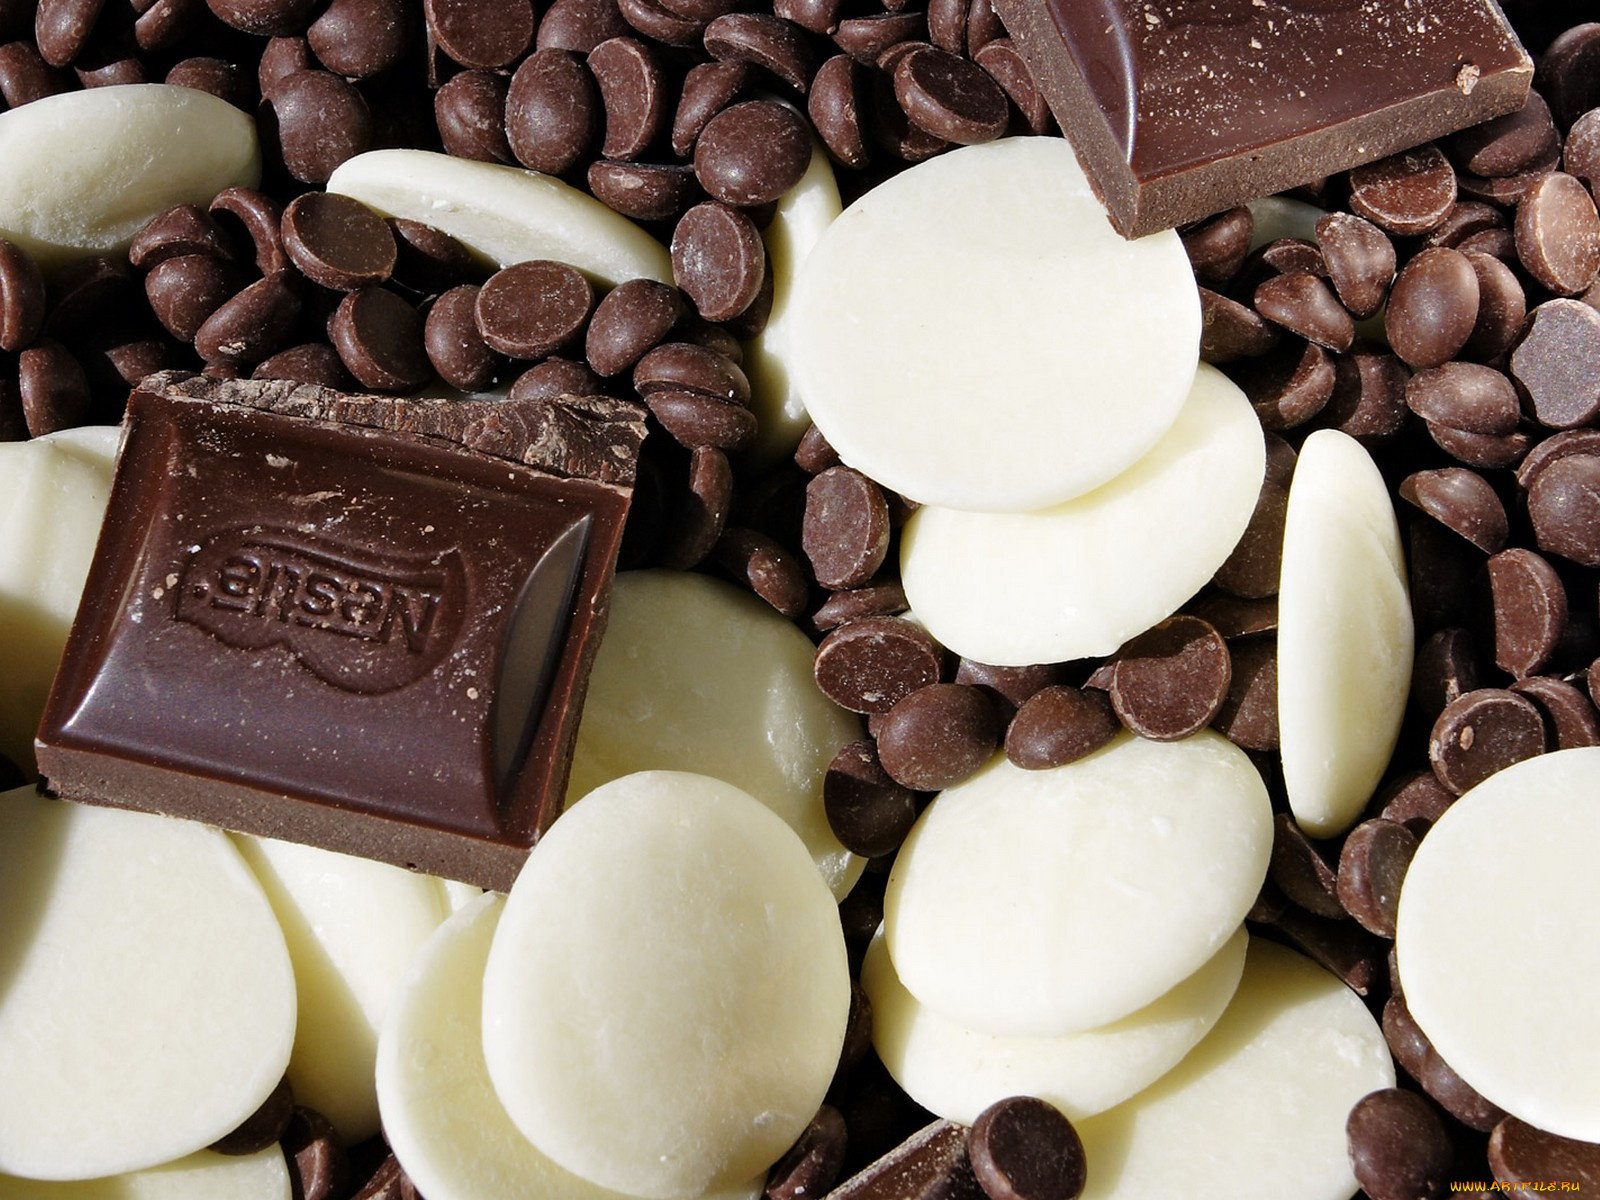 Chocolate pictures. Шоколад. Молочный шоколад. Шоколадные конфеты. Красивый шоколад.